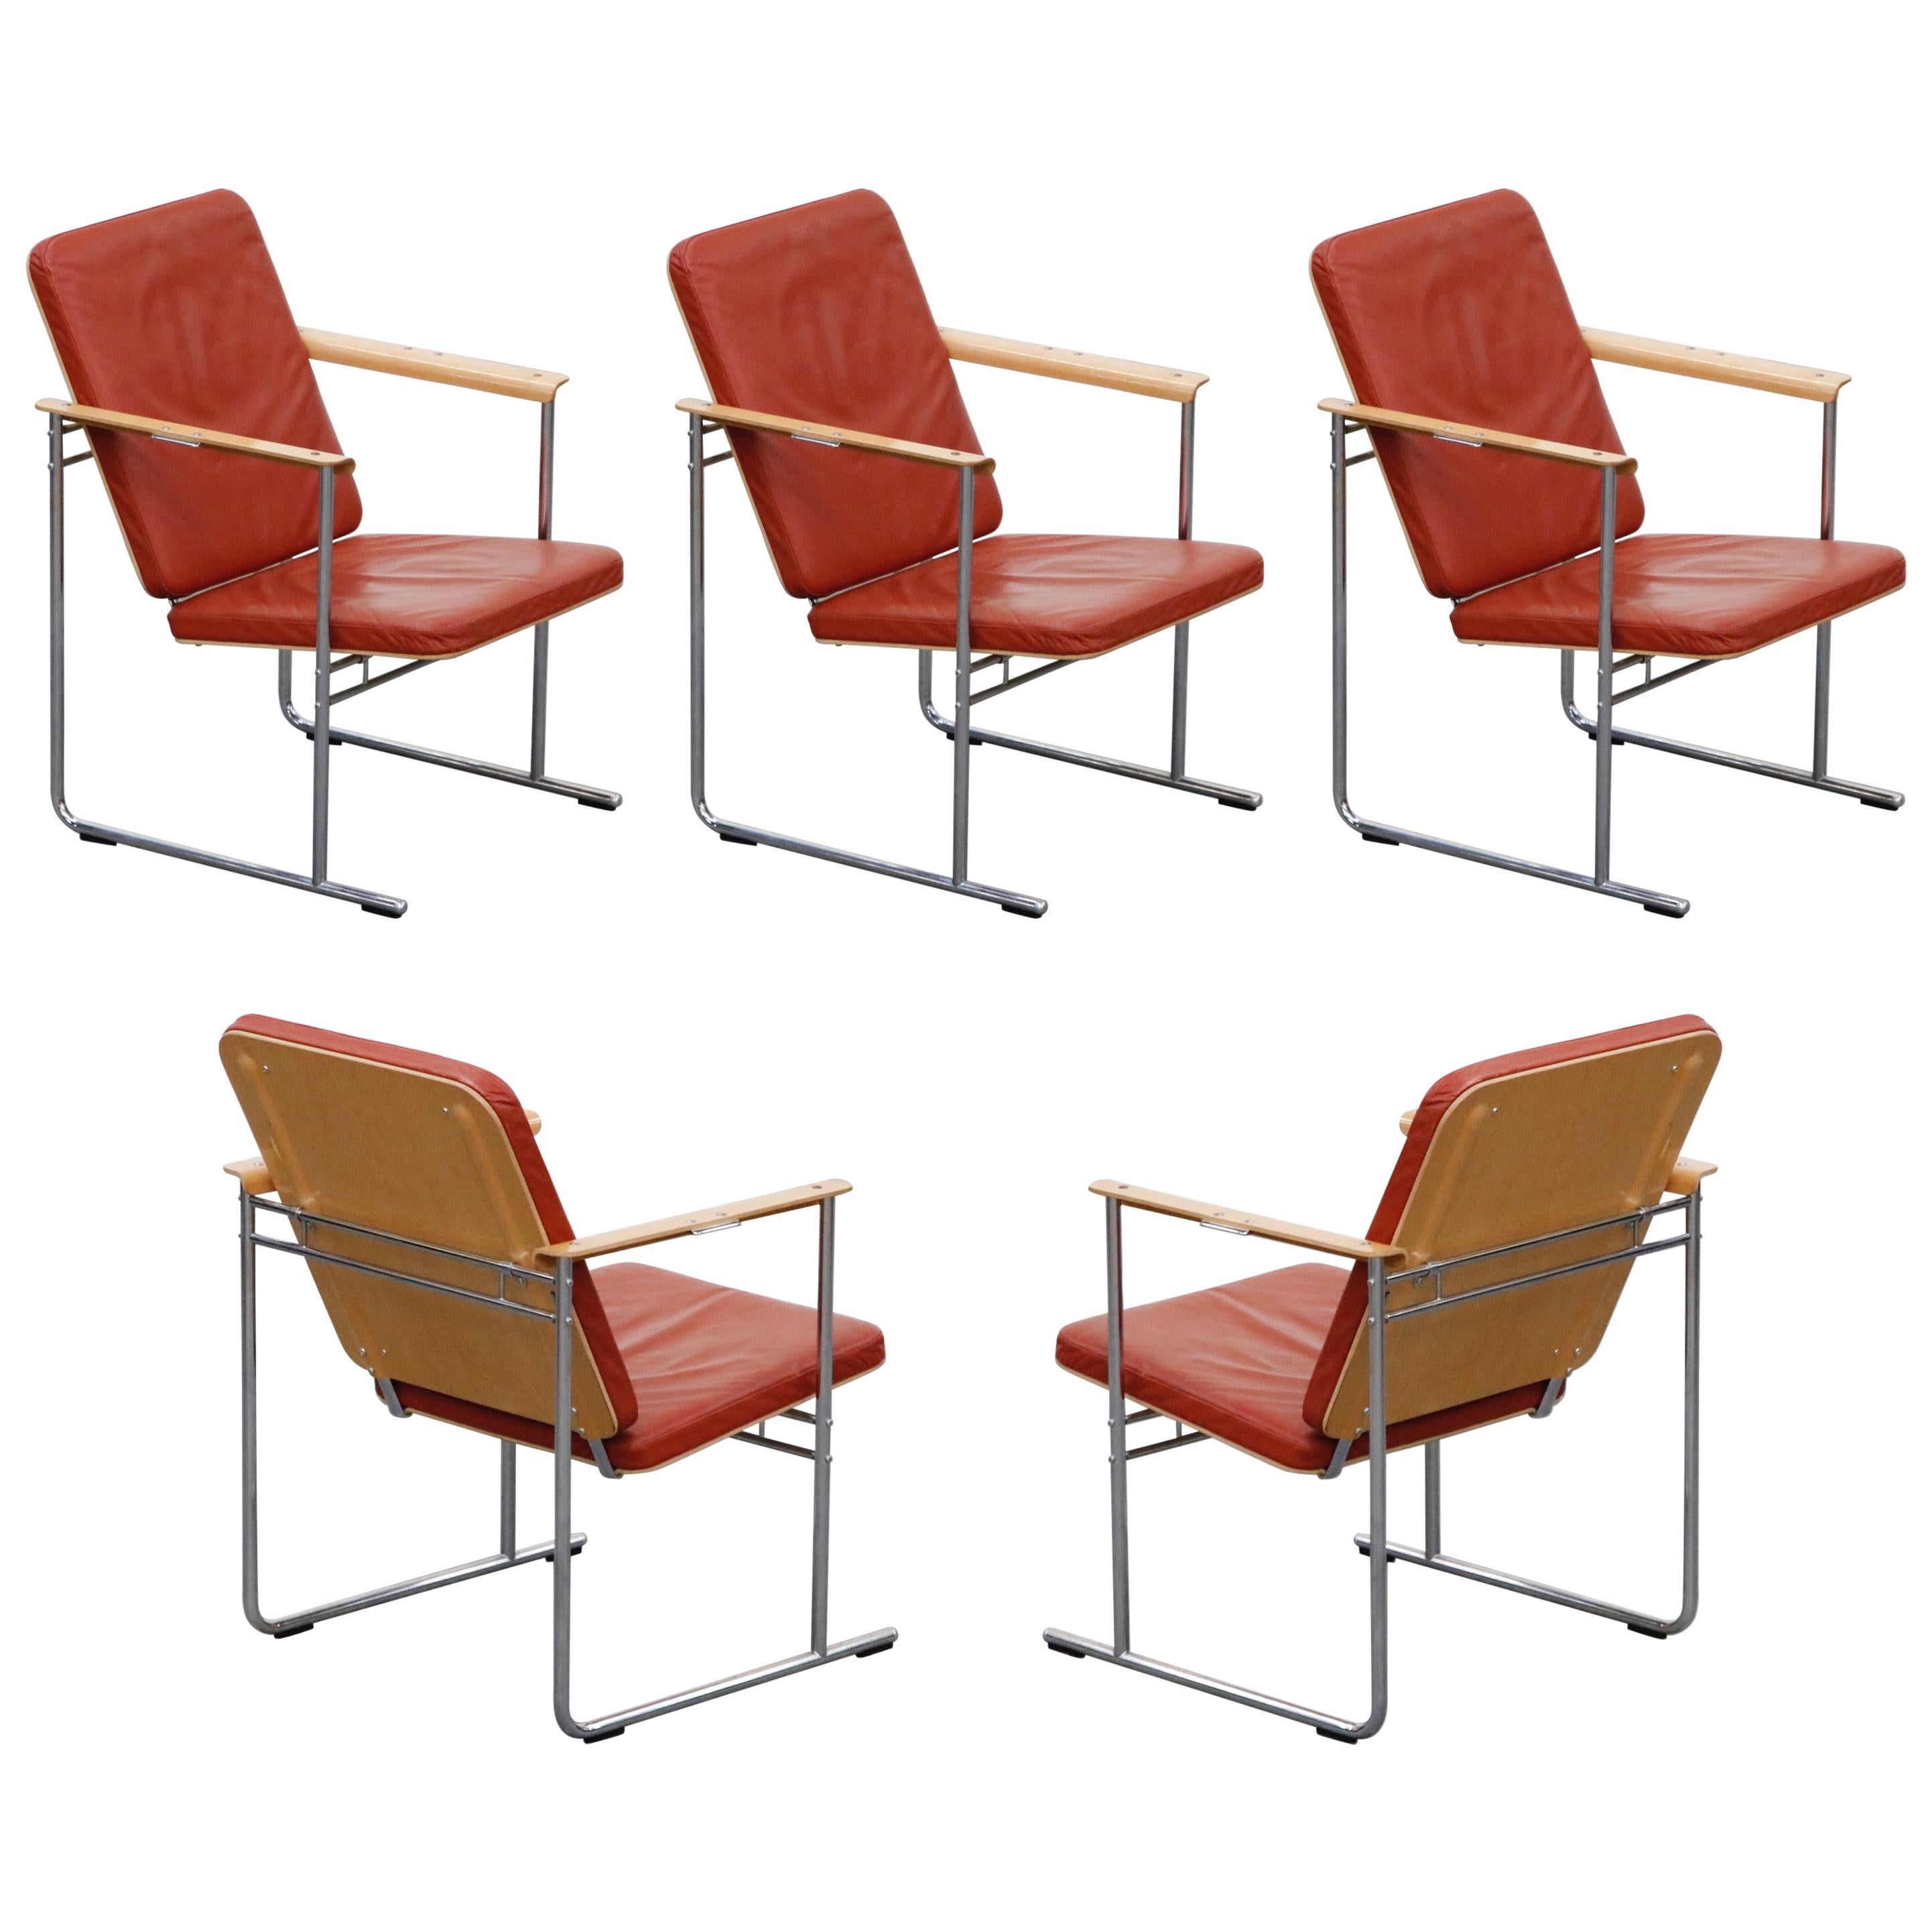 Yrjö Kukkapuro 'Skaala' Leather Lounge Chairs for Avarte, Finland, 1970s